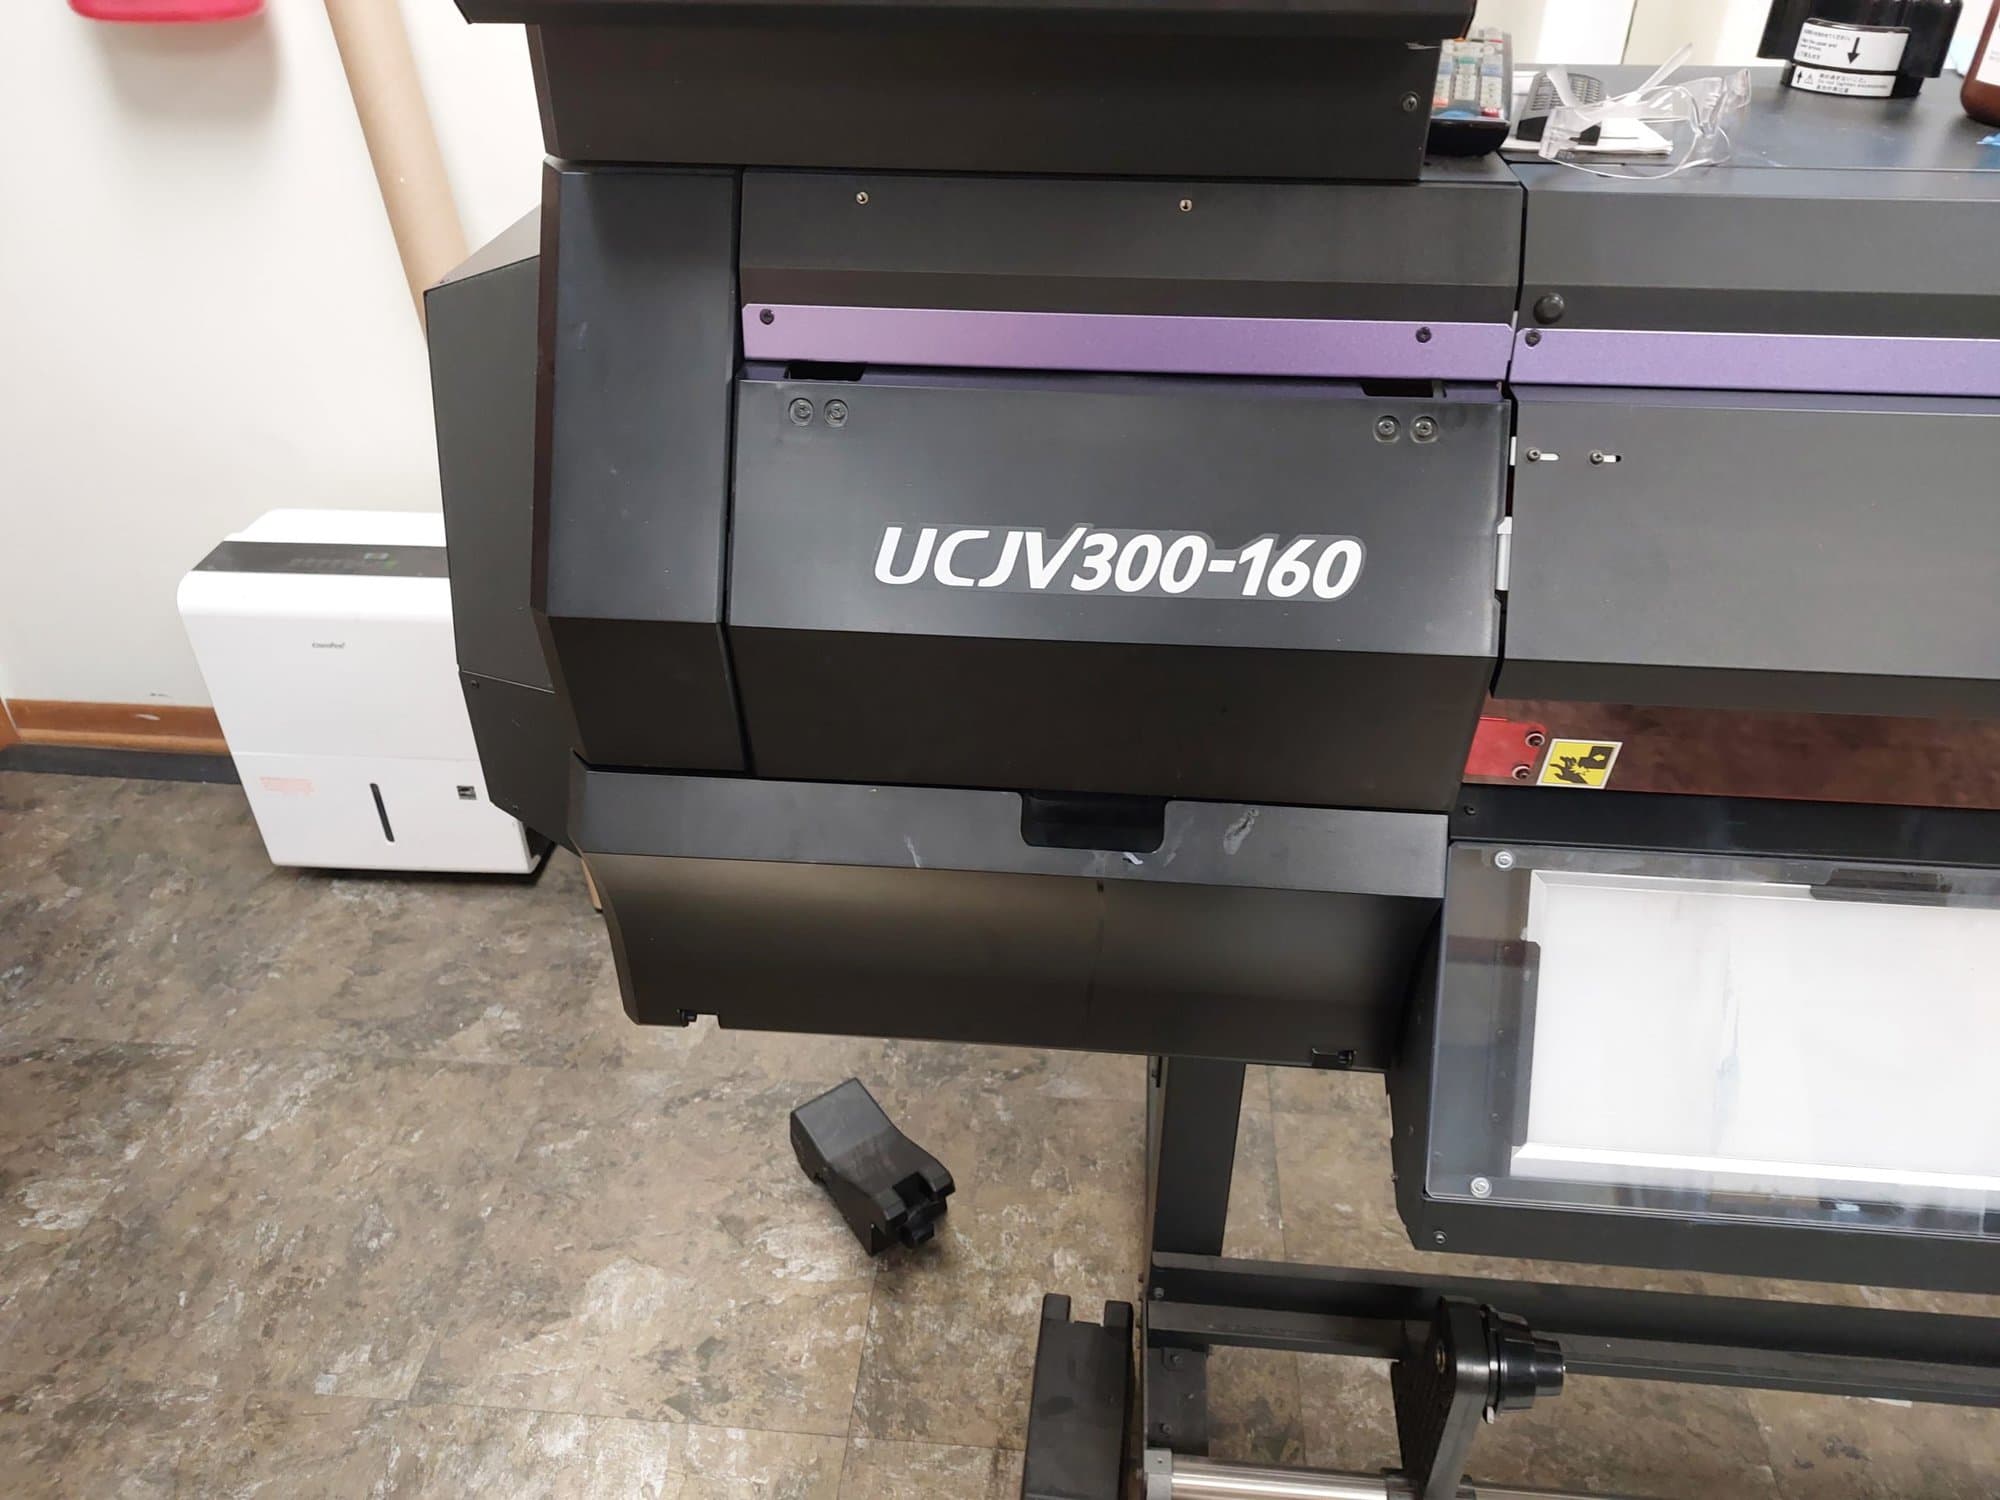 Mimaki UCJV300-160 UV Printer-Cutter - Mimaki UCJV300-160 UV Printer-Cutter  - Mimaki Roll-to-Roll Printers - Mimaki - Printers By Brand